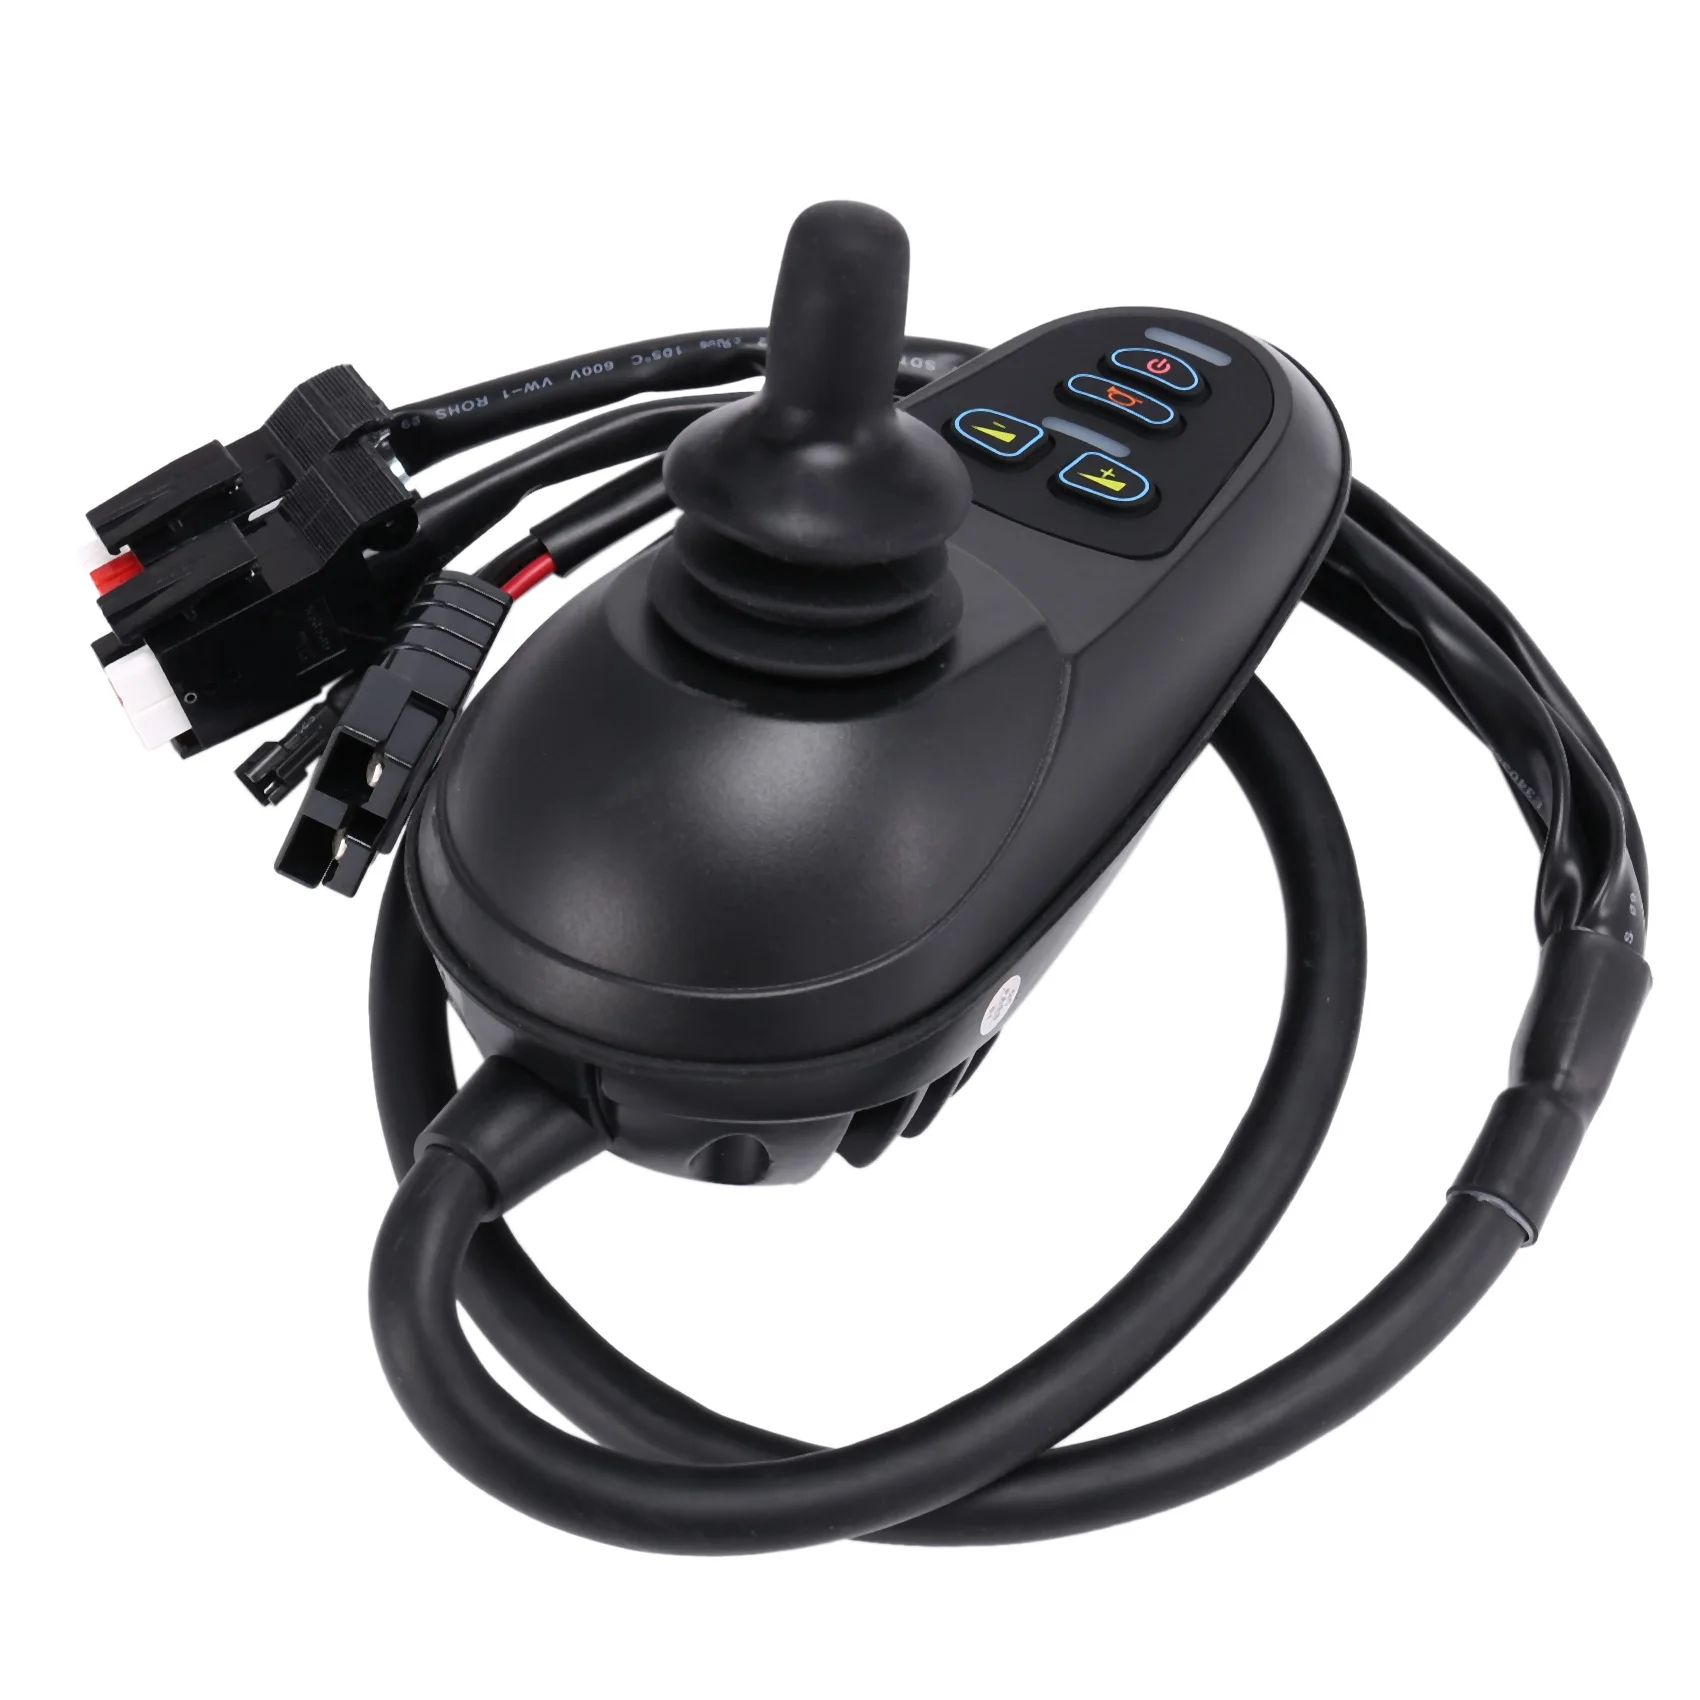 

24V 50AMP Power Wheelchair Controller Joystick with USB Port Repl